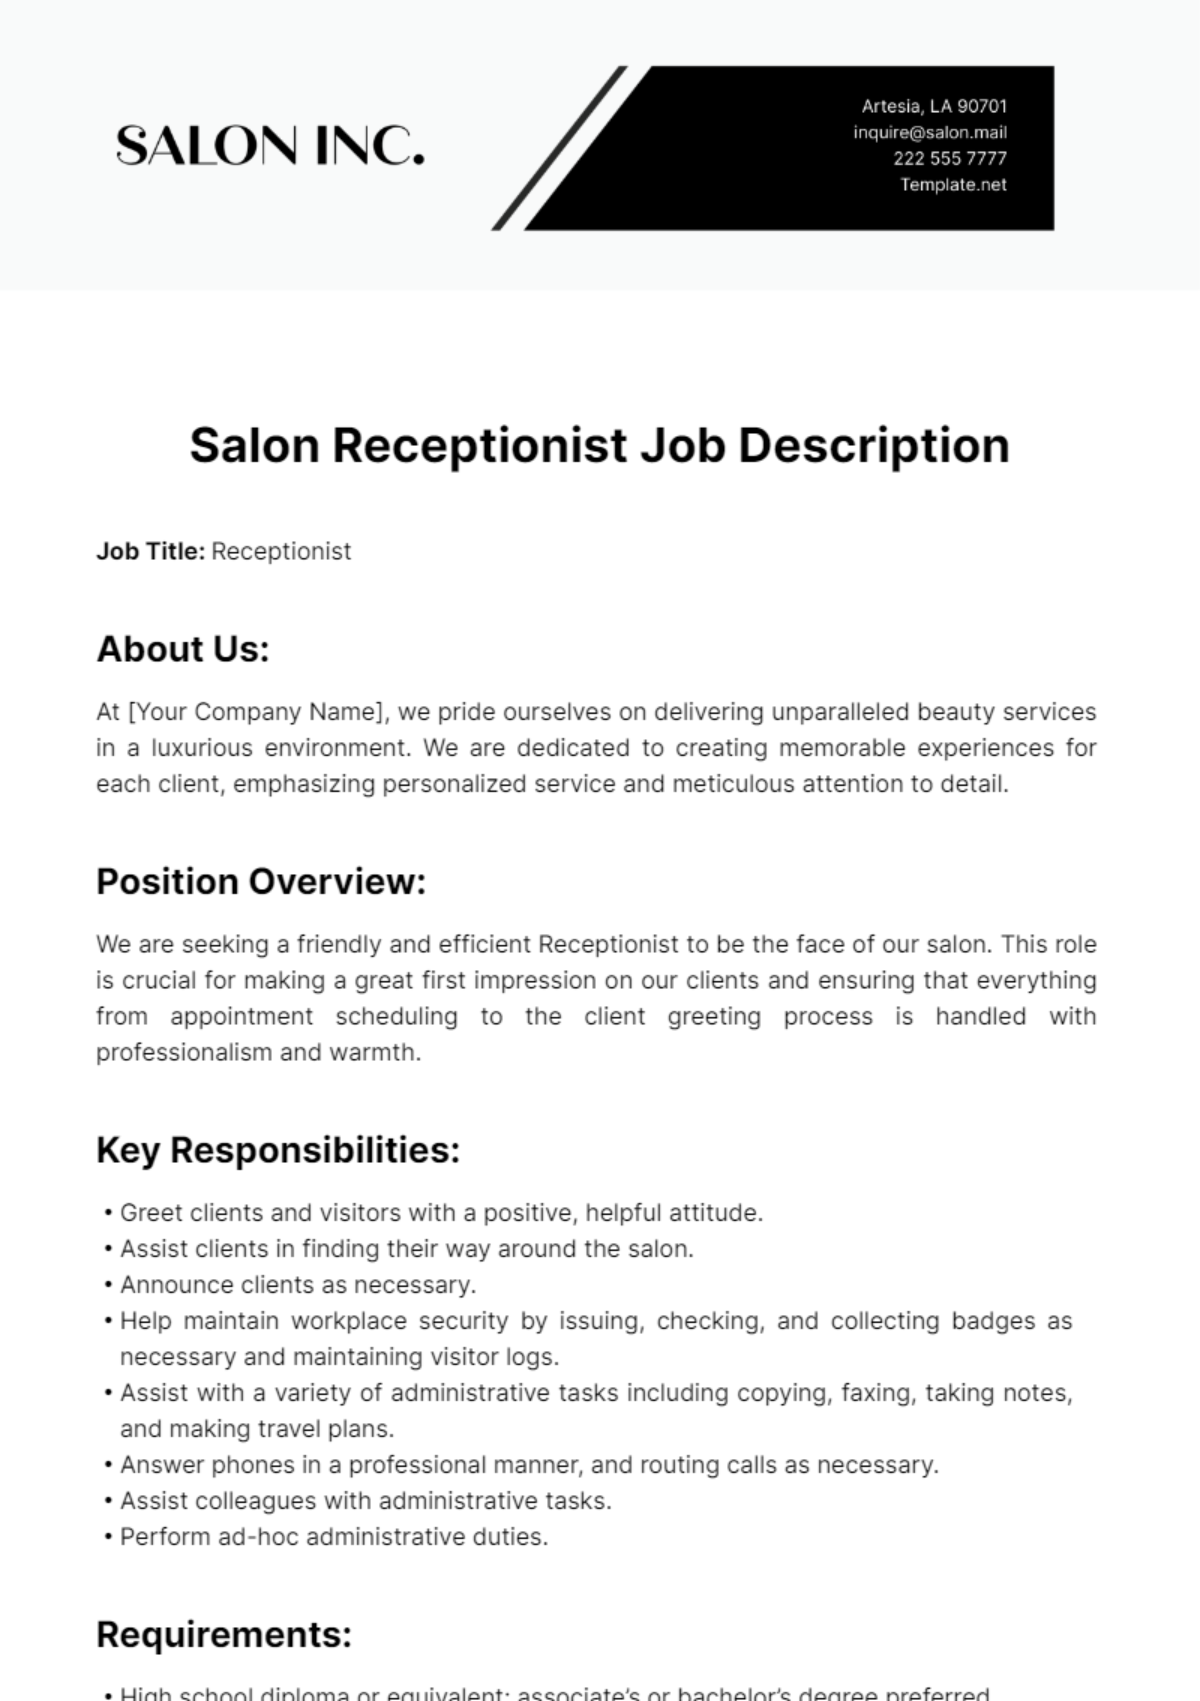 Free Salon Receptionist Job Description Template